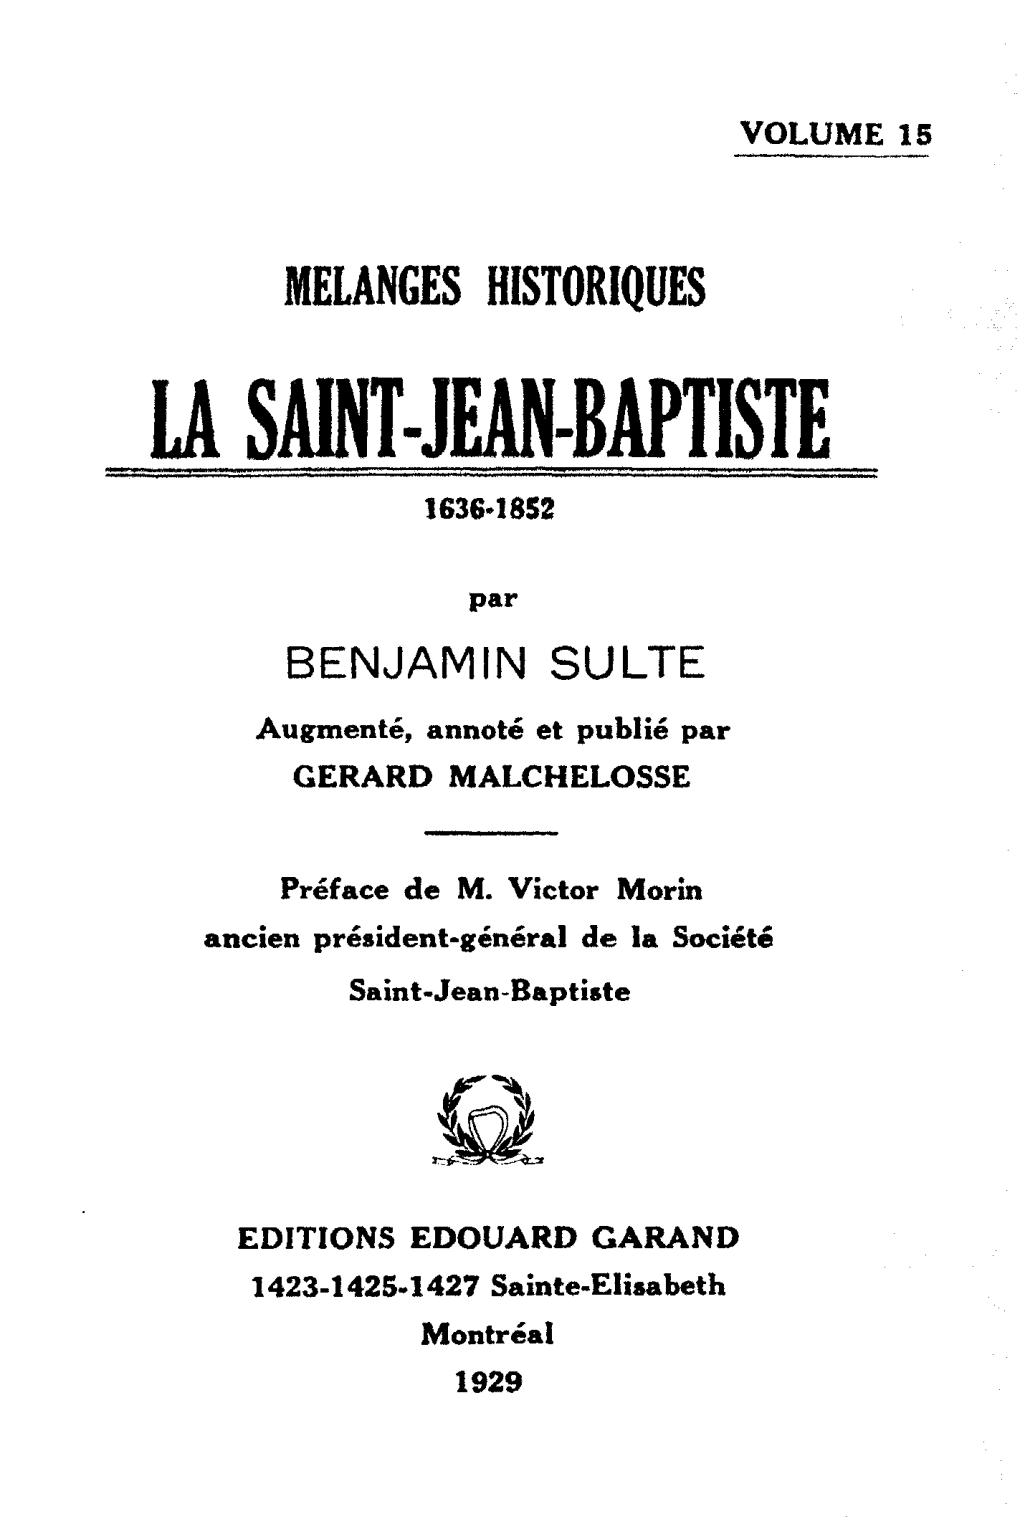 La Saint-Jean-Baptiste